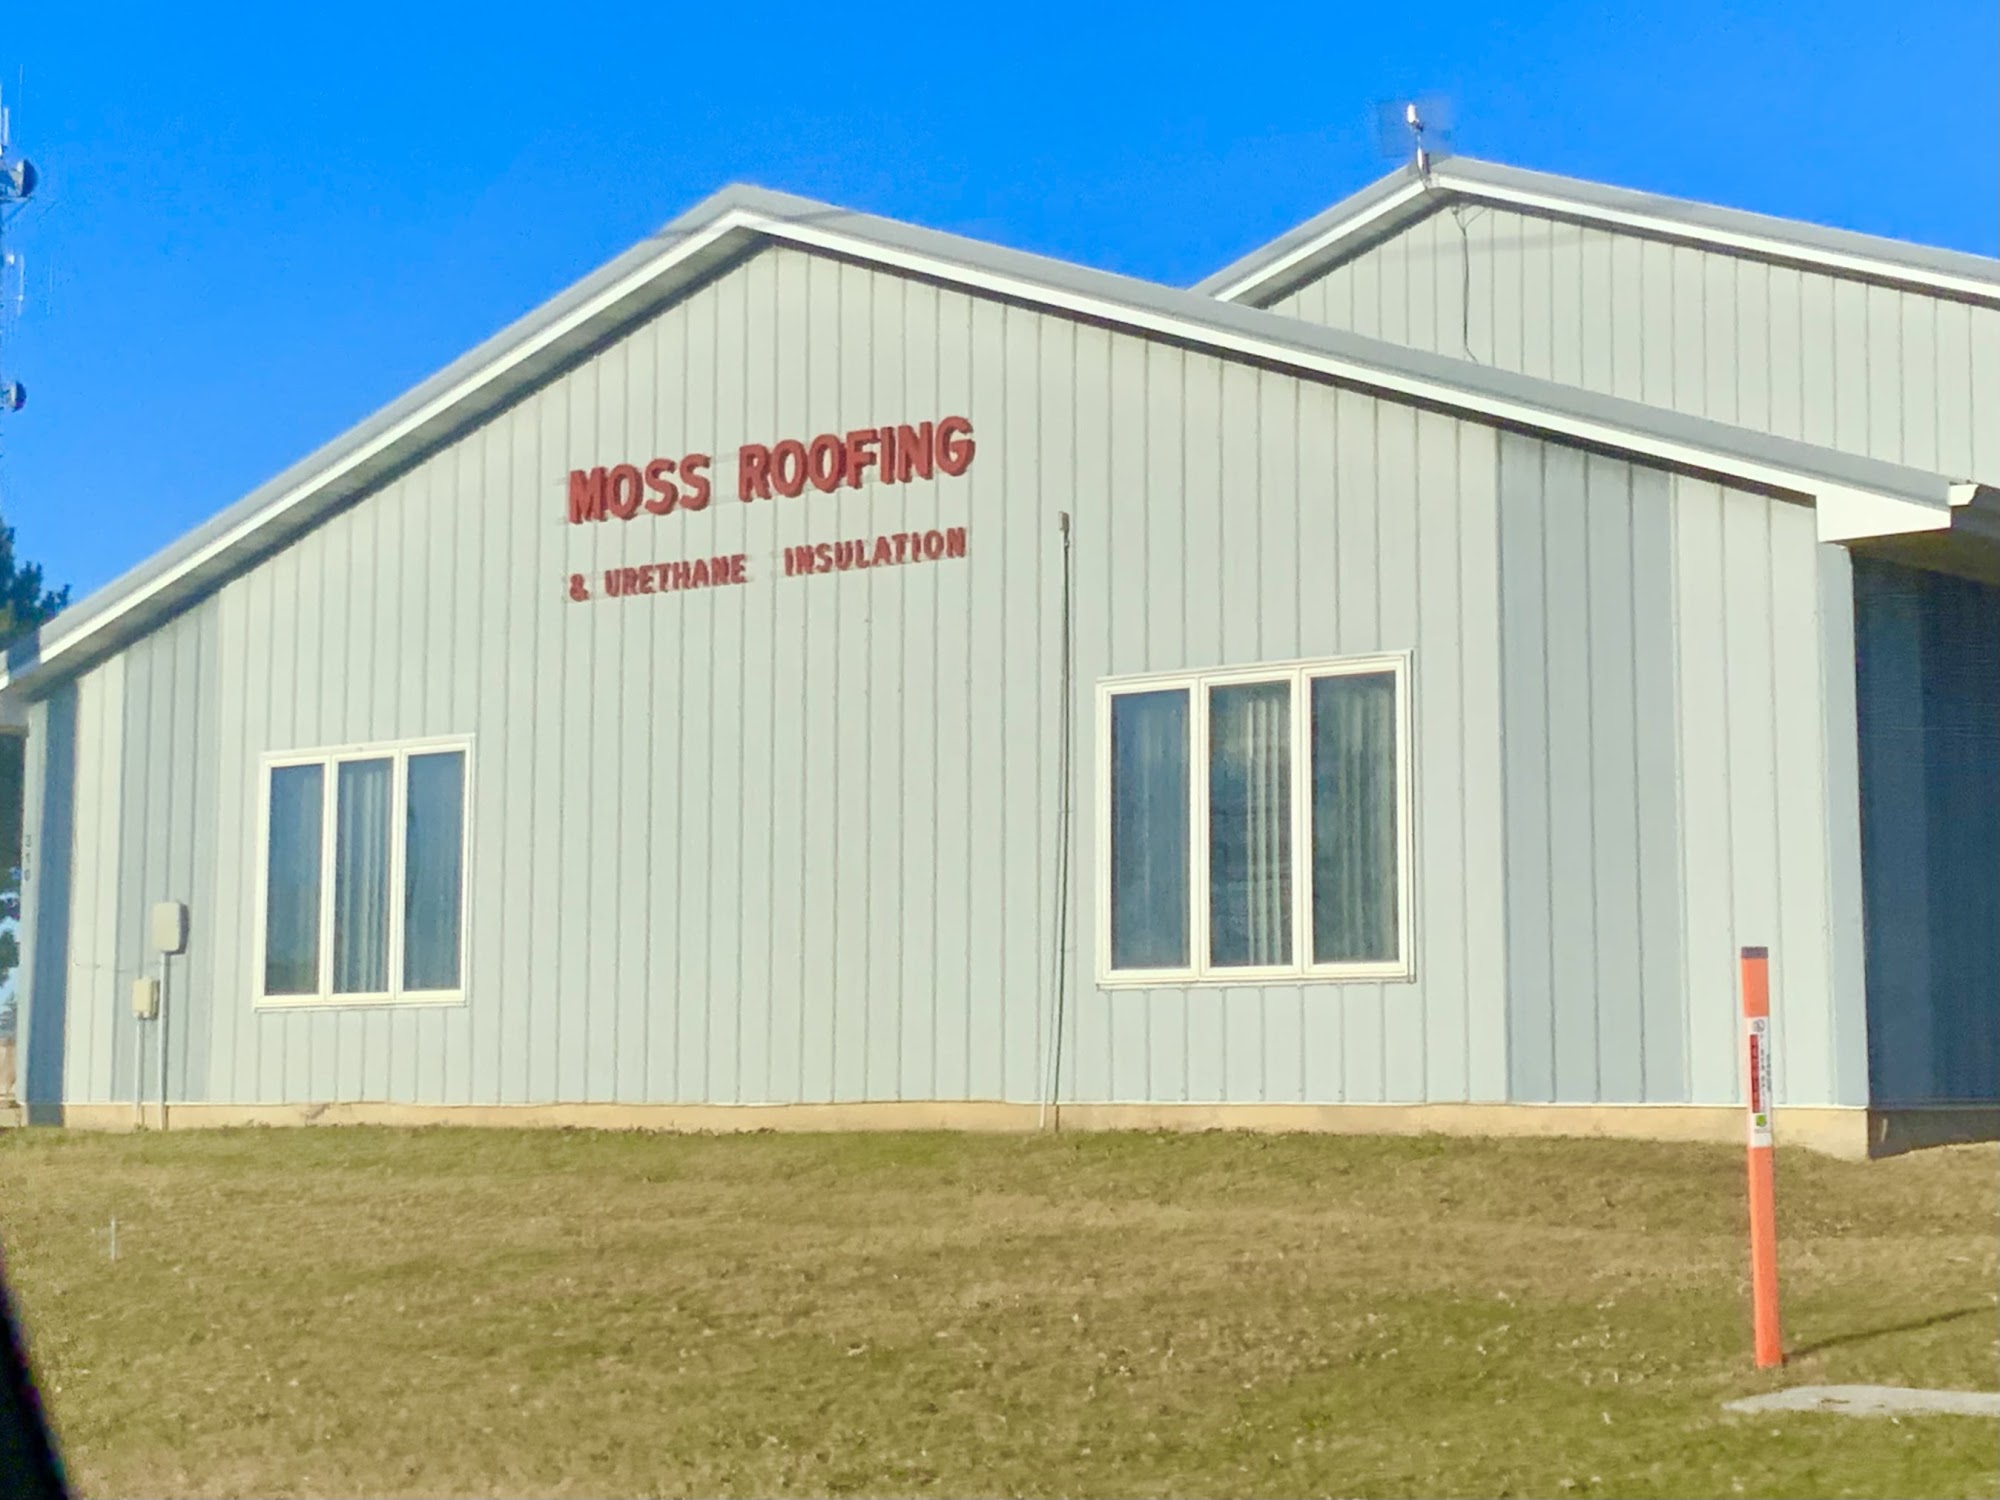 Moss Roofing & Insulation, Inc. 310 IA-150, West Union Iowa 52175